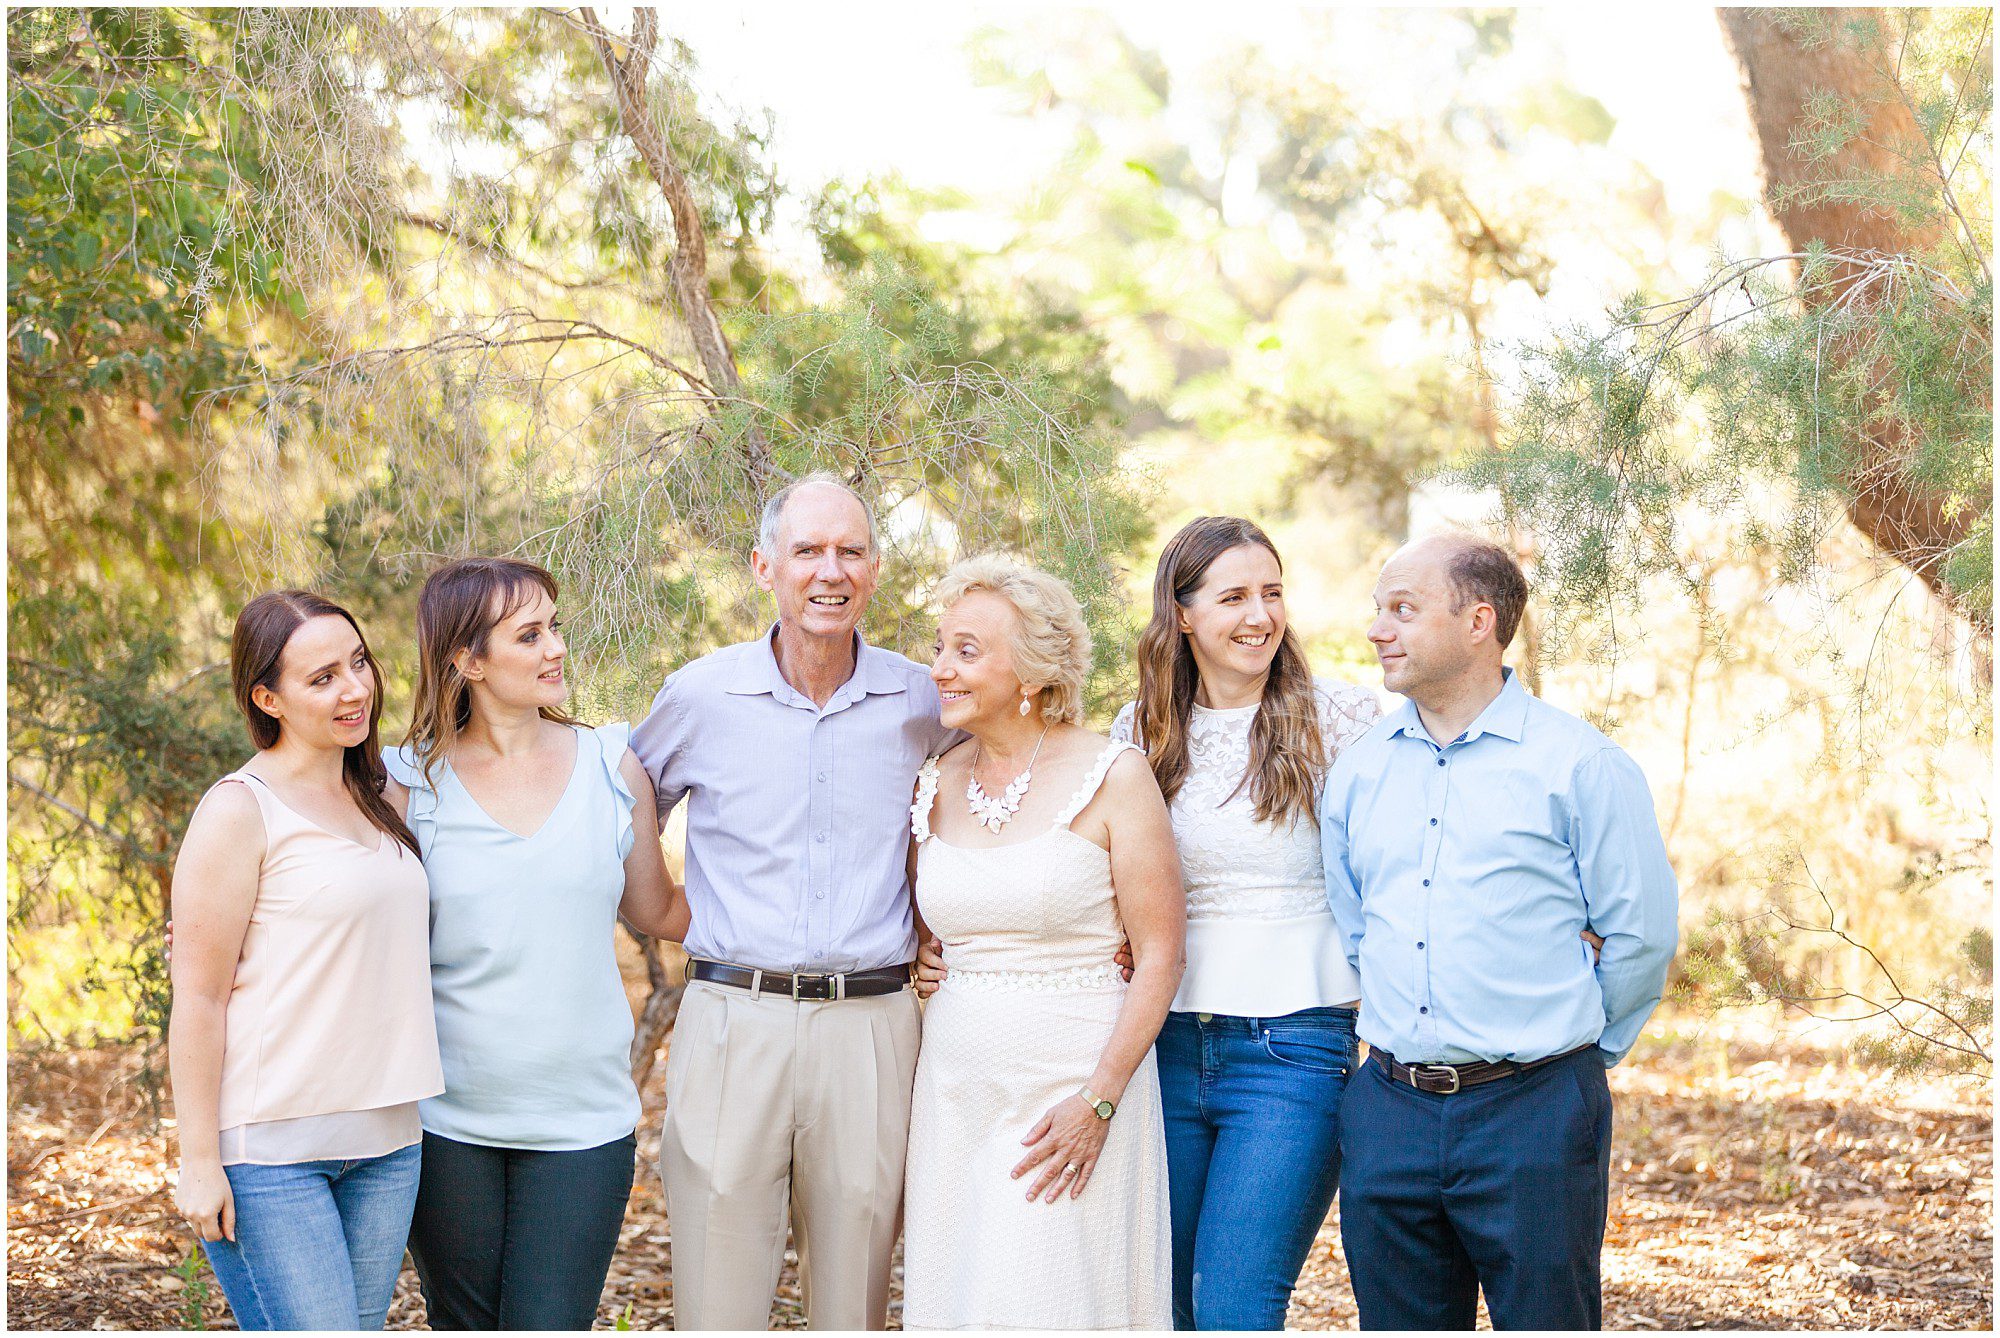 Perth family photographer family portrait session